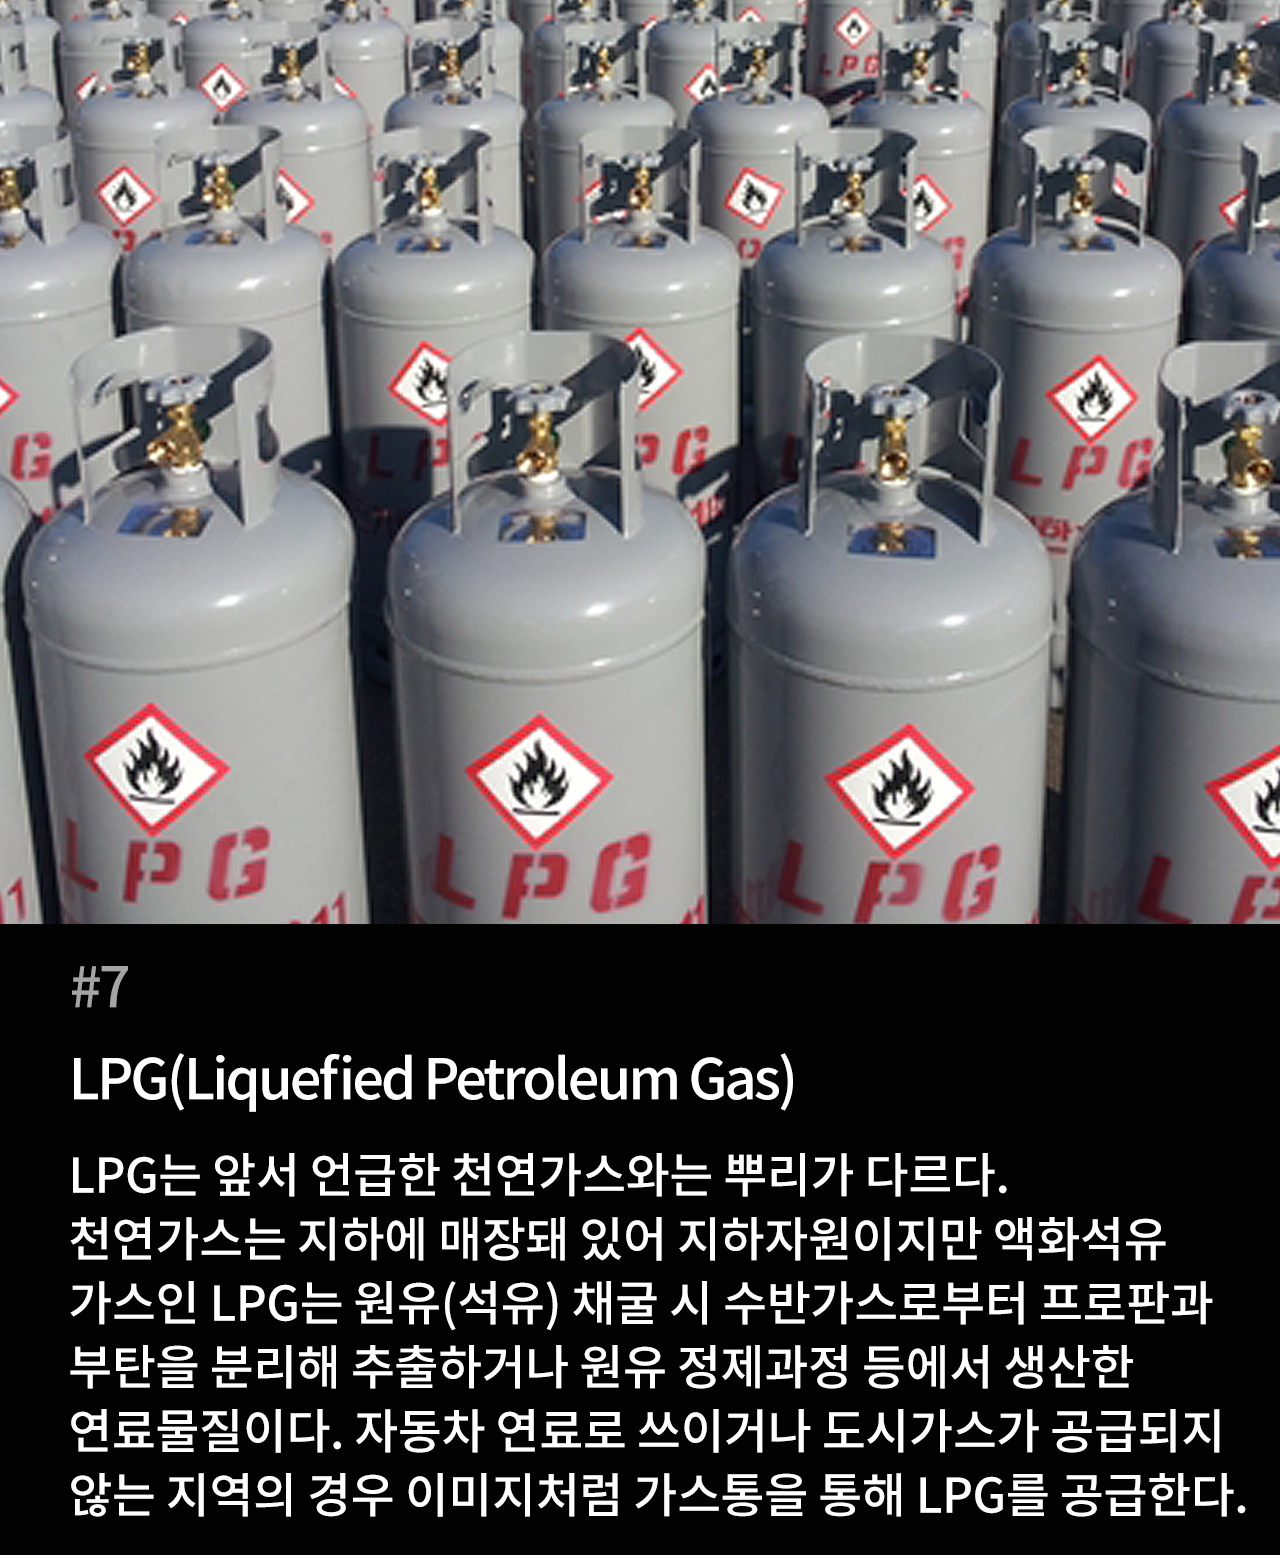 LNG, PNG, CNG, LPG 소개